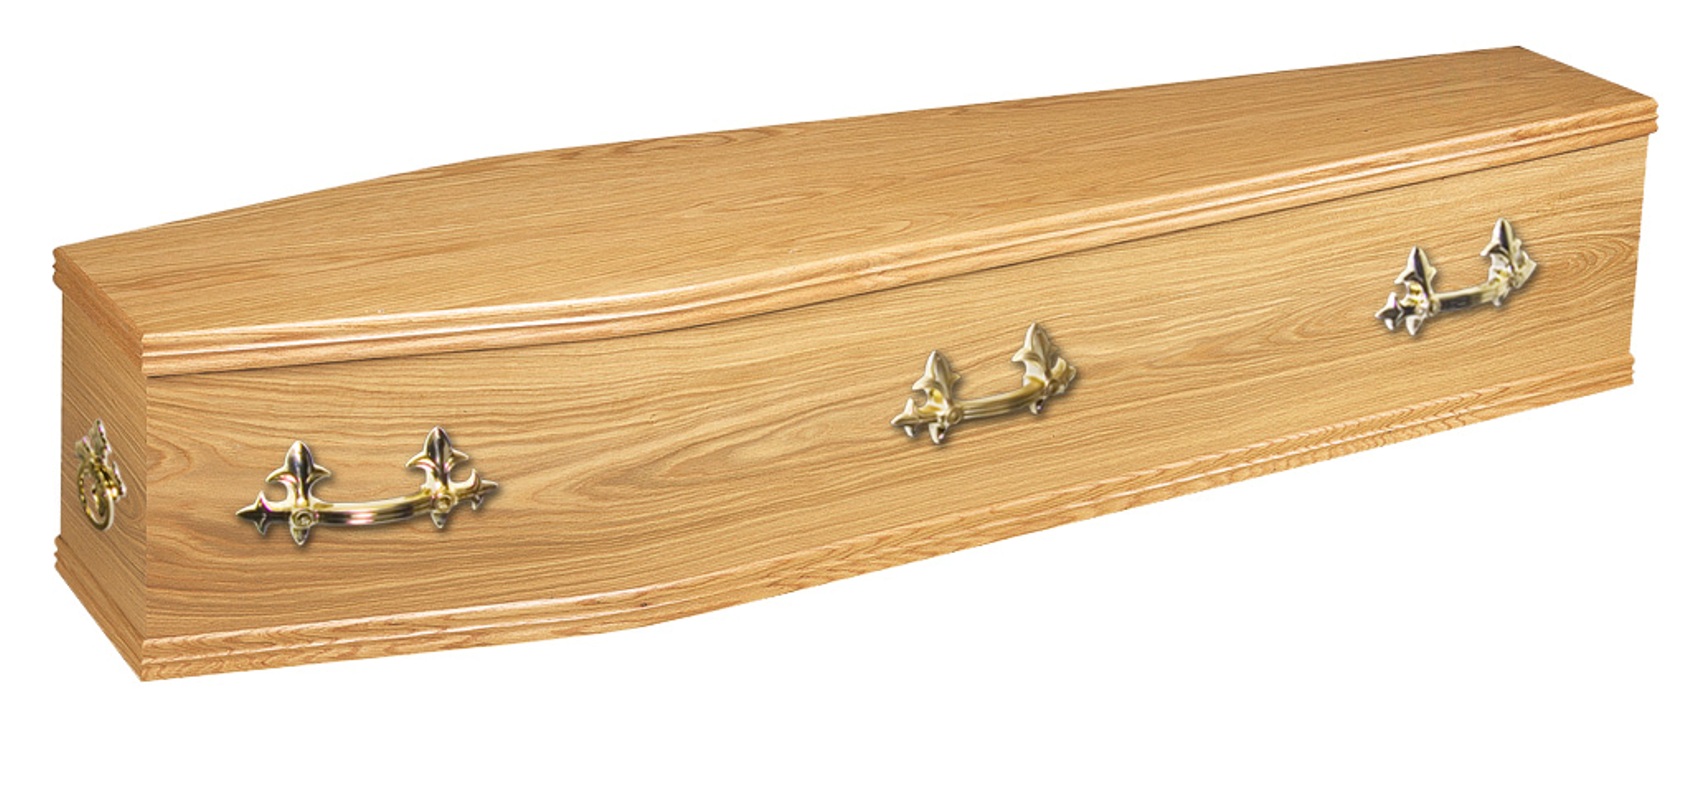 Veneered-Chiltern-Oak coffin